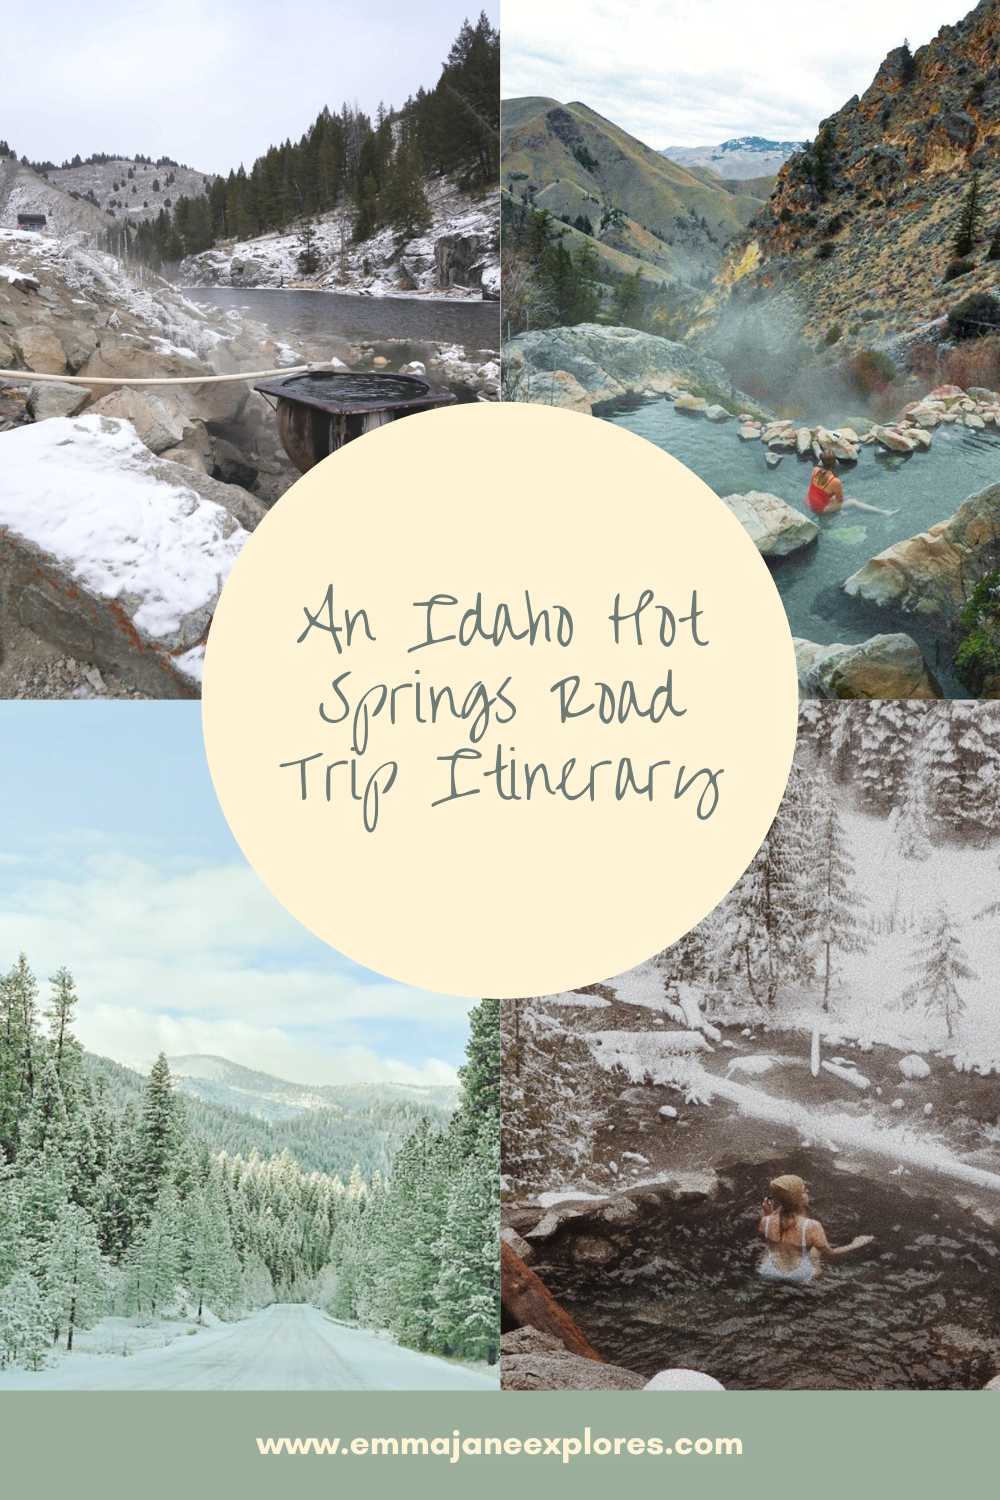 An Idaho Hot Springs Road Trip Itinerary - Emma Jane Explores